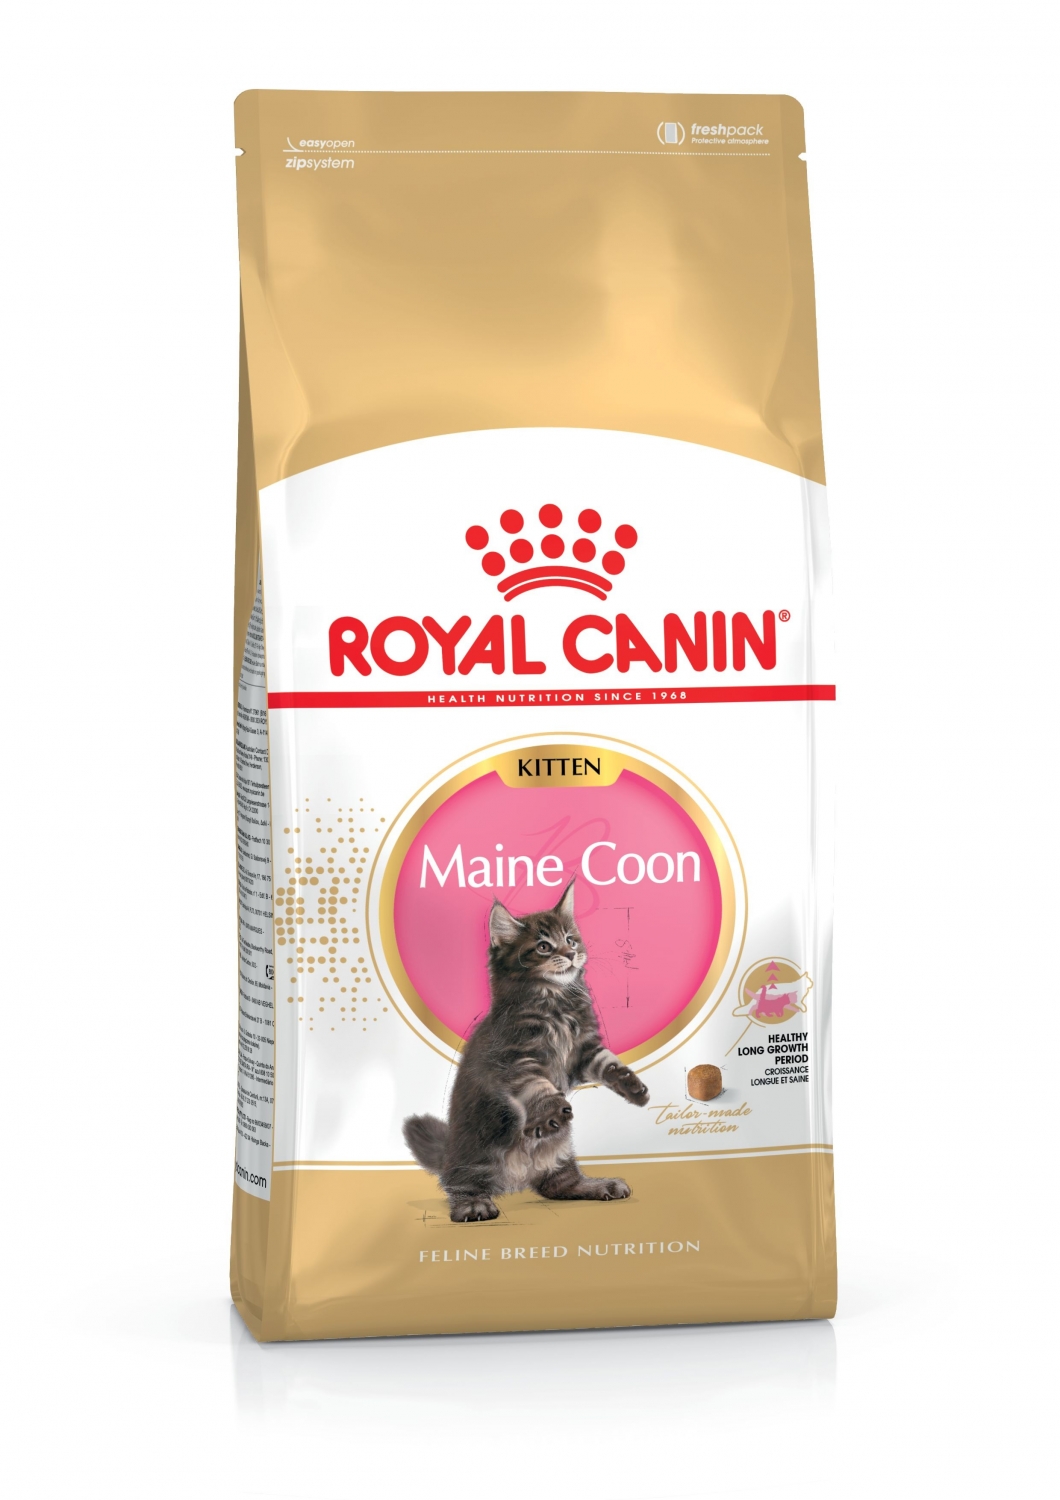 Royal Canin Maine Coon Kitten karma sucha dla kociąt do 15 miesiąca, rasy Maine Coon